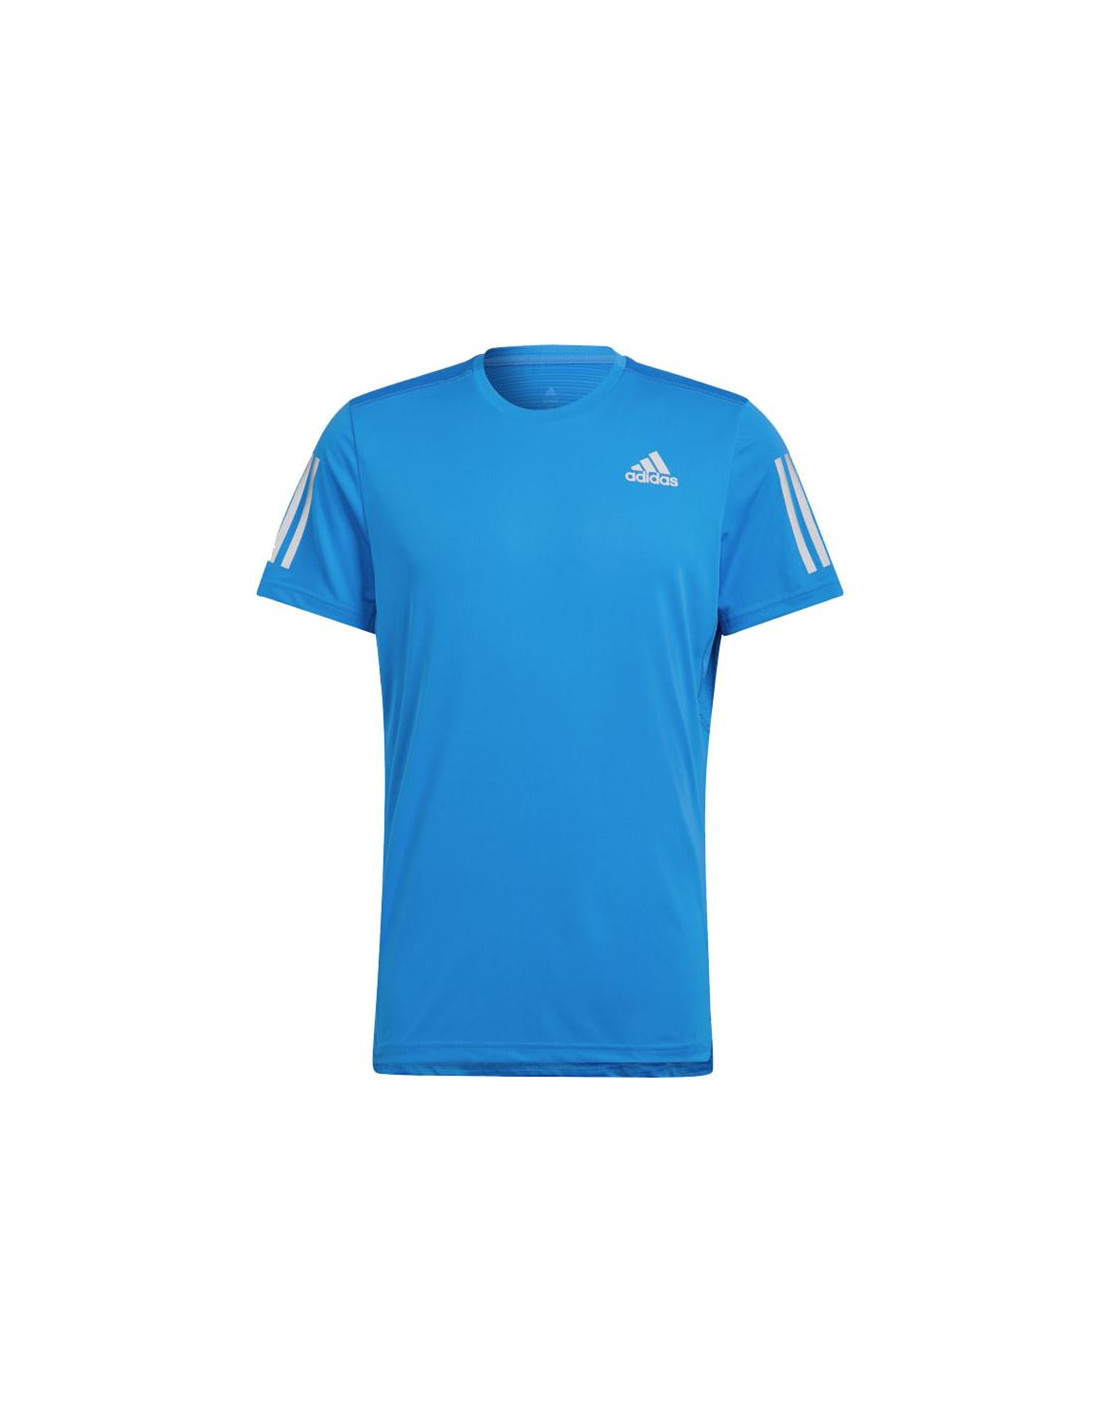 Camiseta adidas own the run m blue